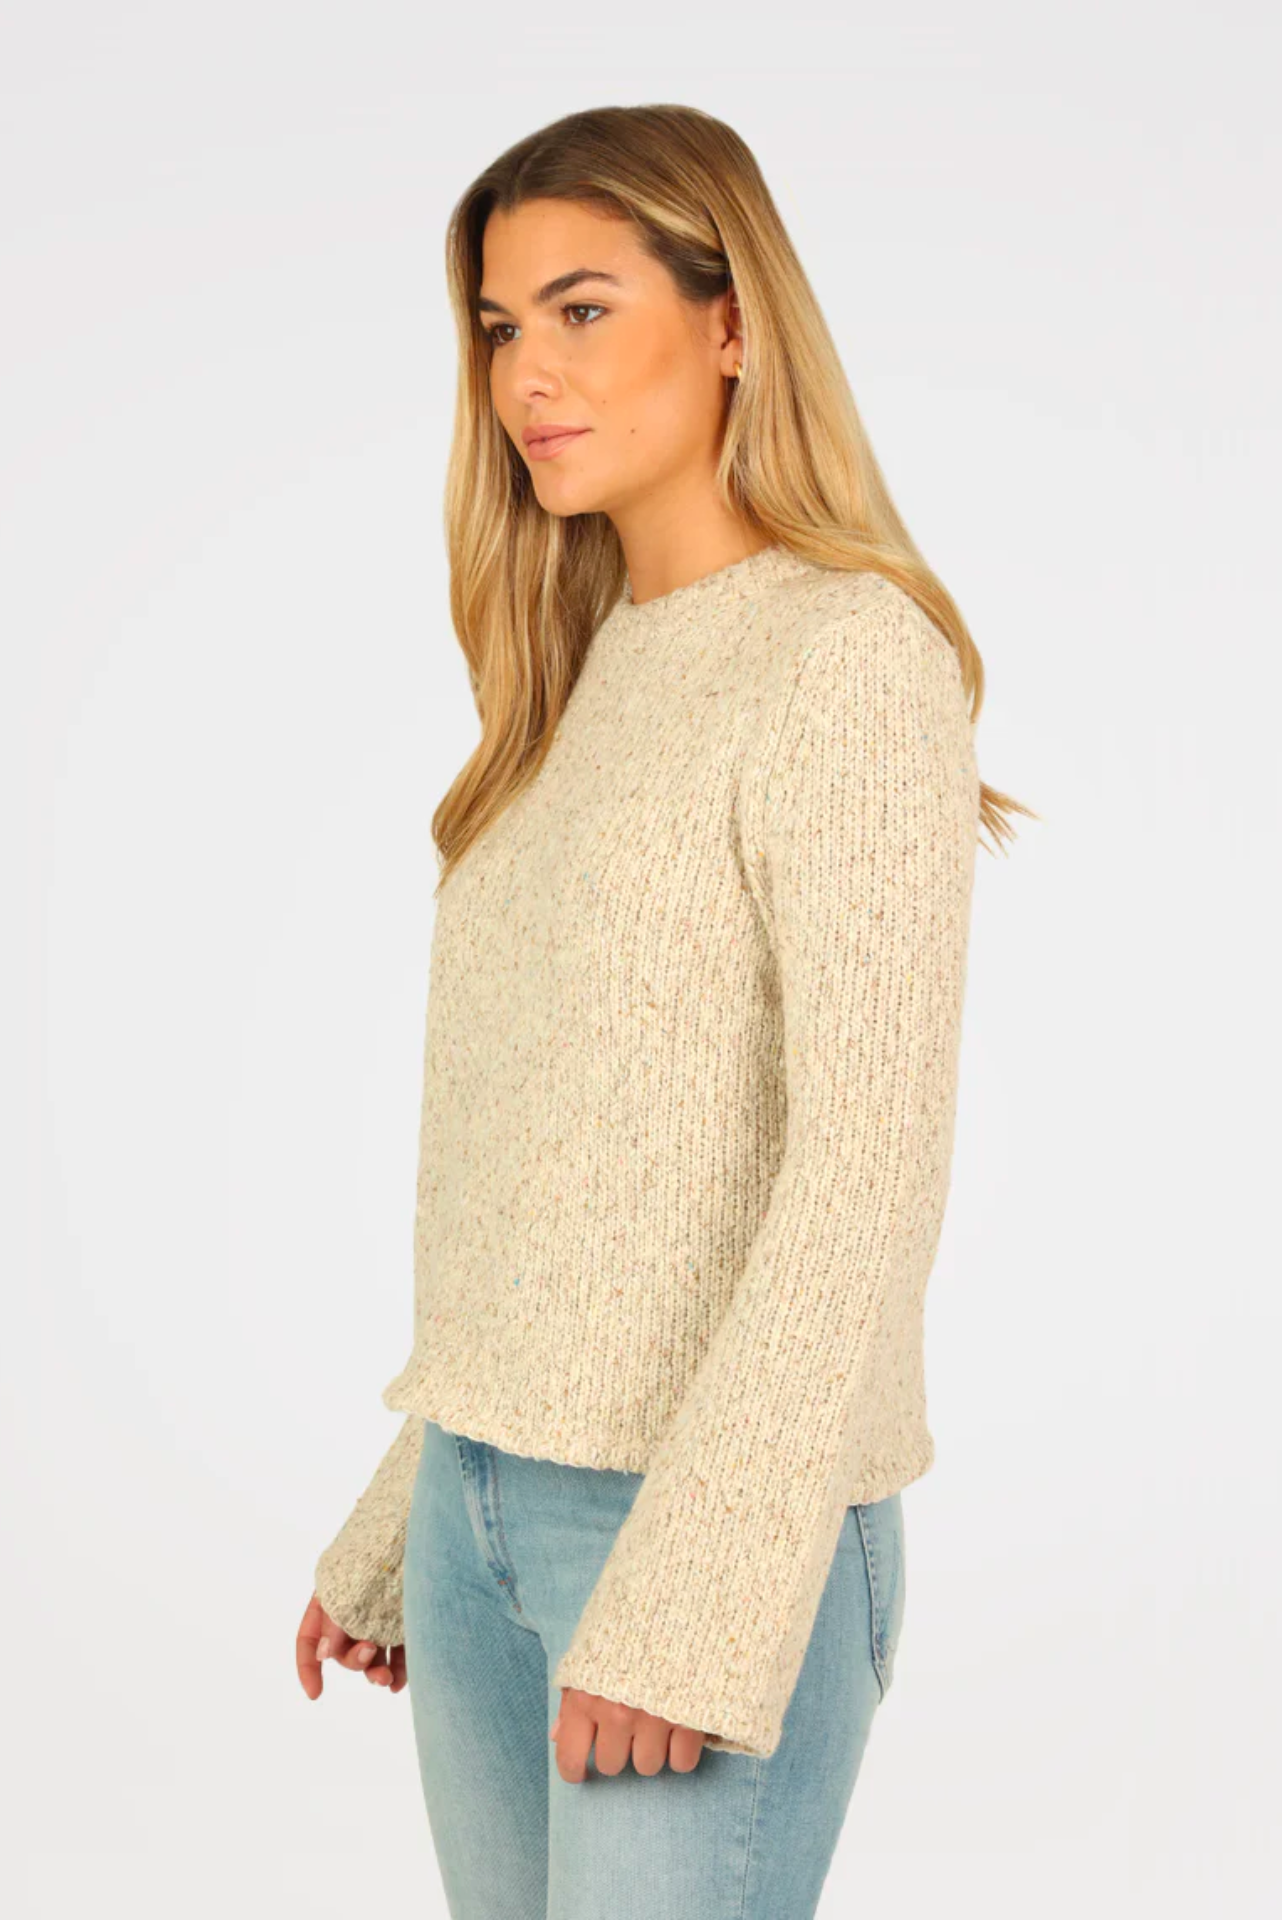 Austin Sweater